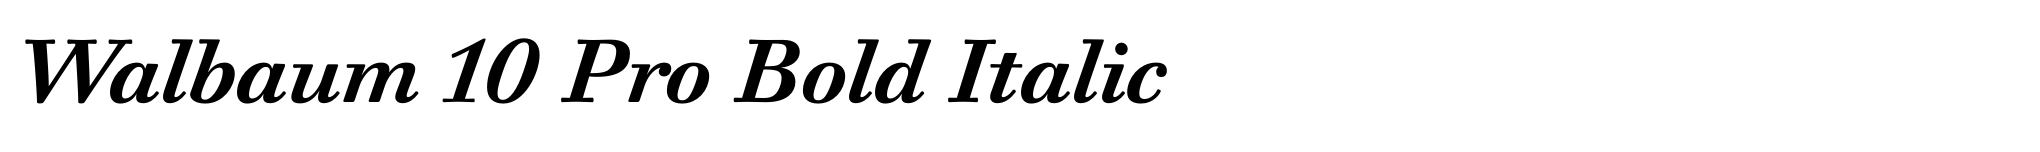 Walbaum 10 Pro Bold Italic image